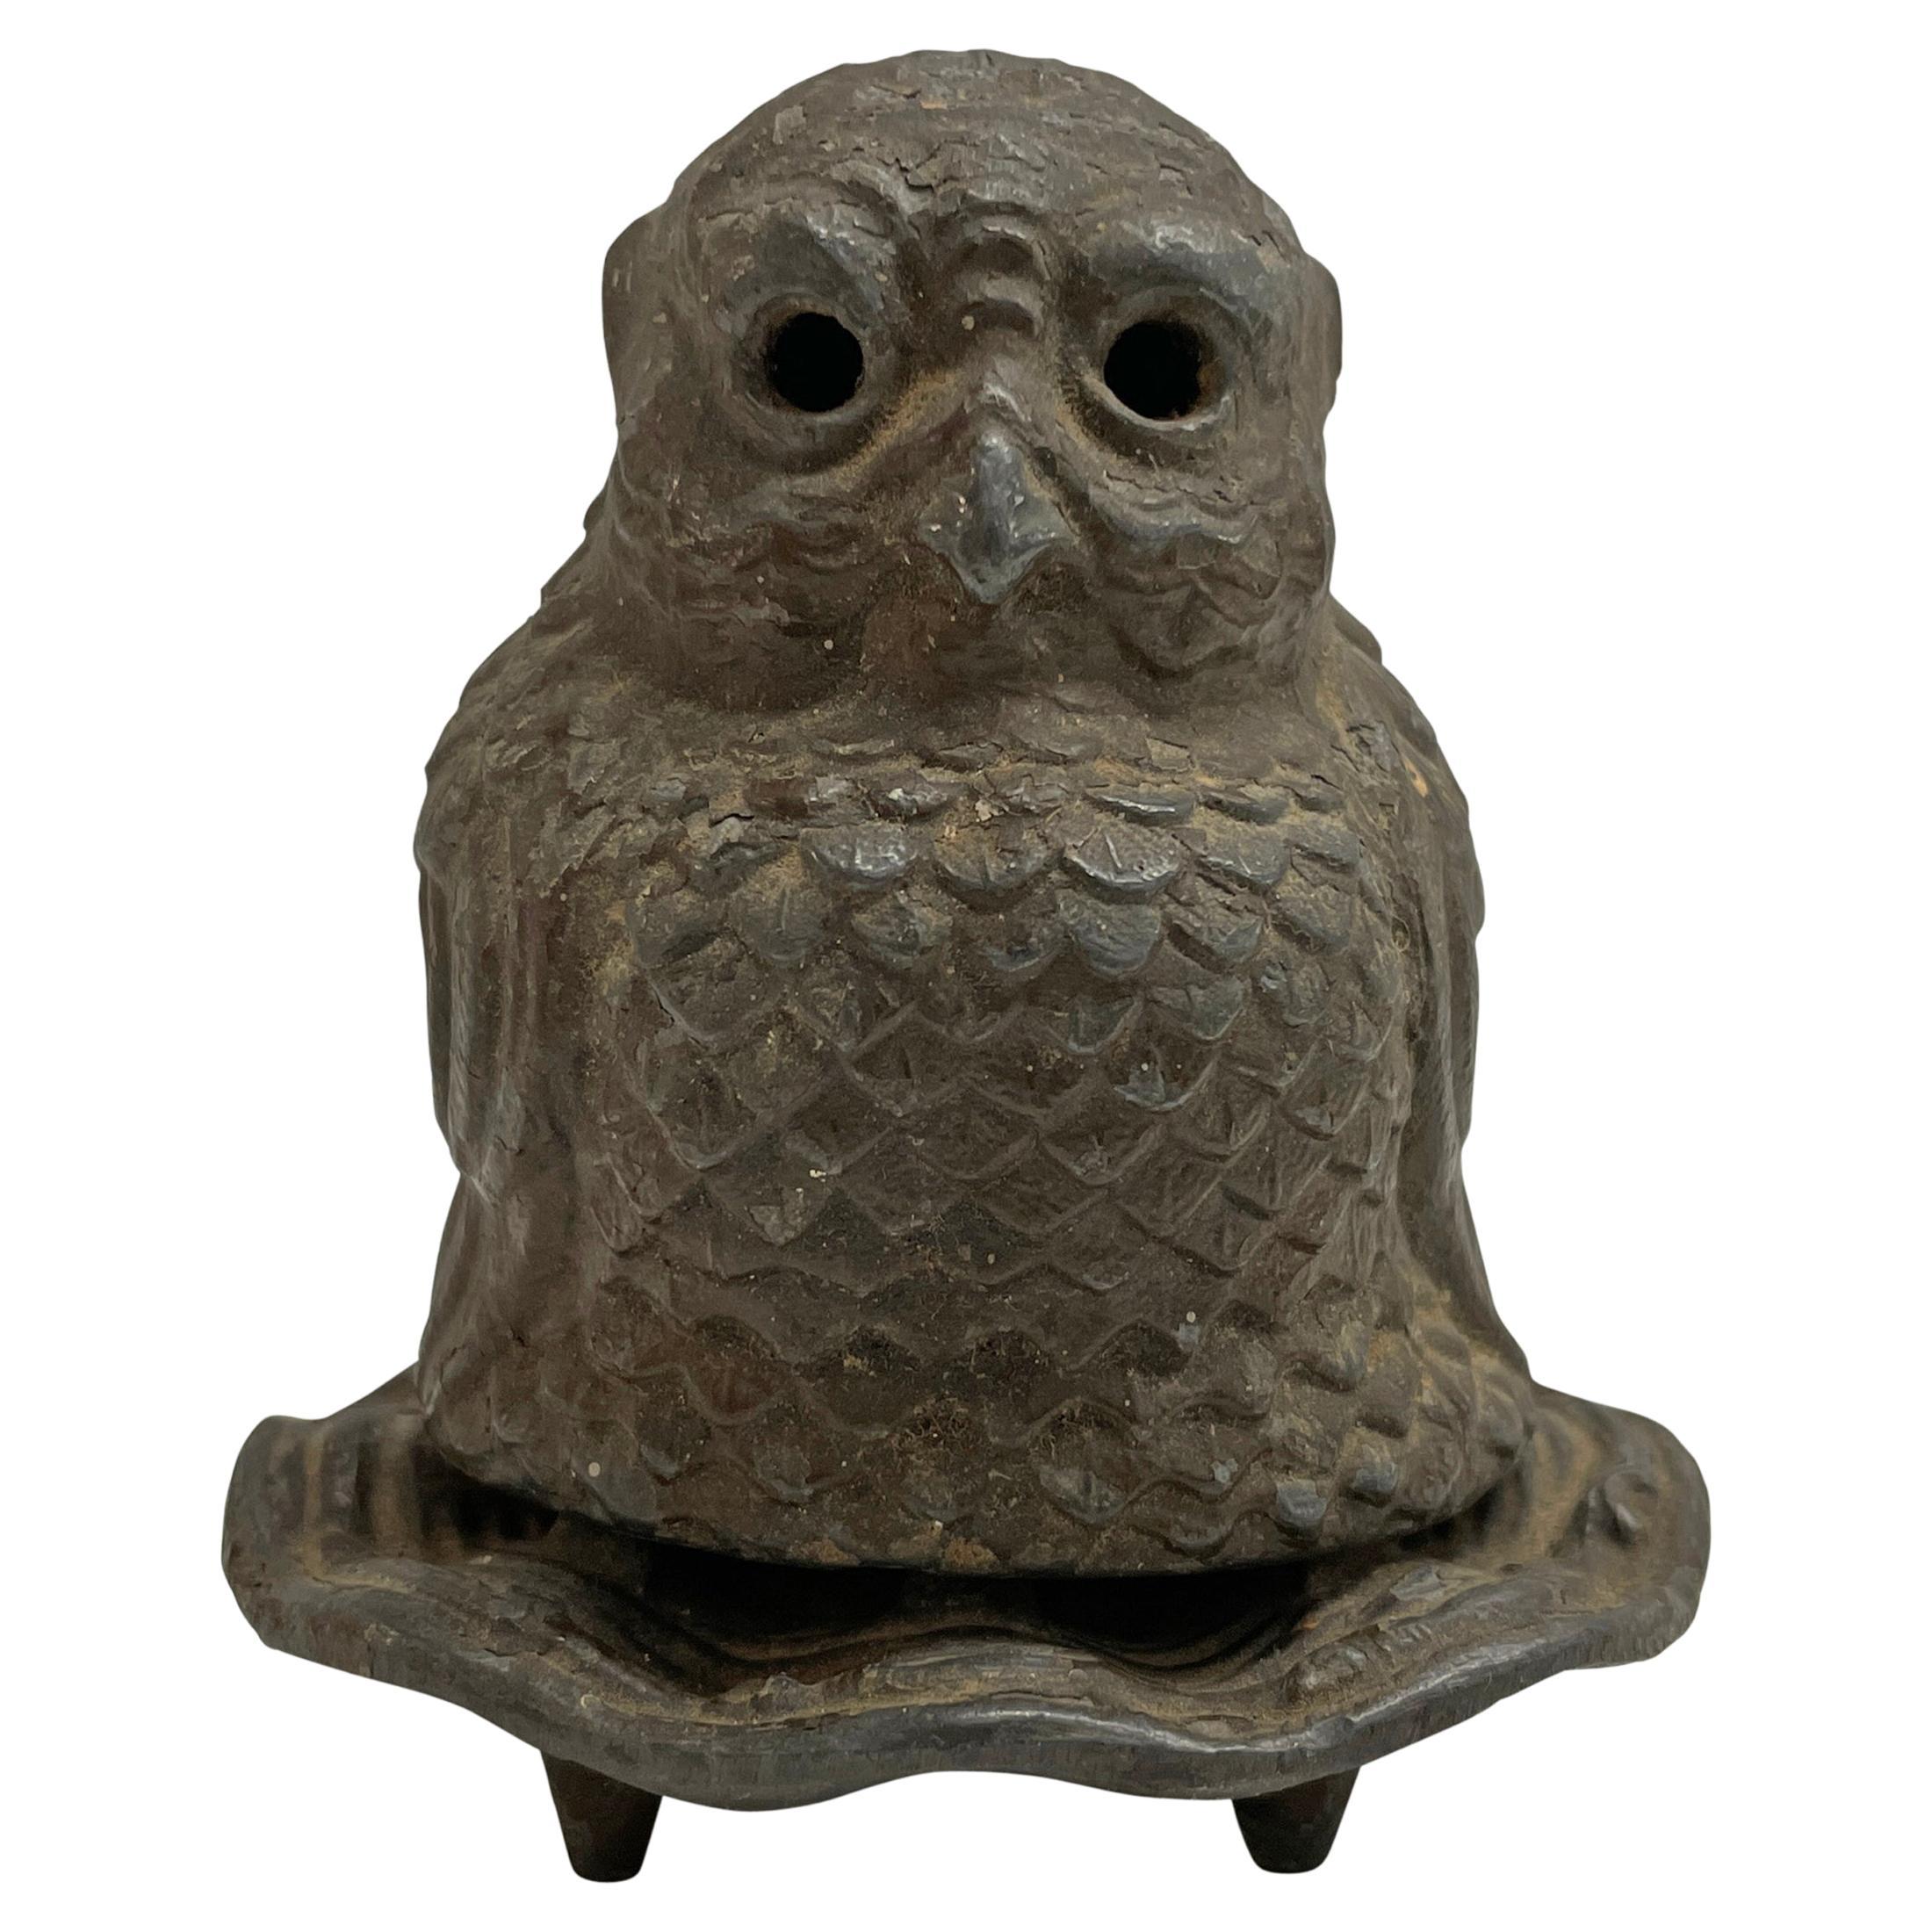 19th Century Japanese Owl Incense Burner